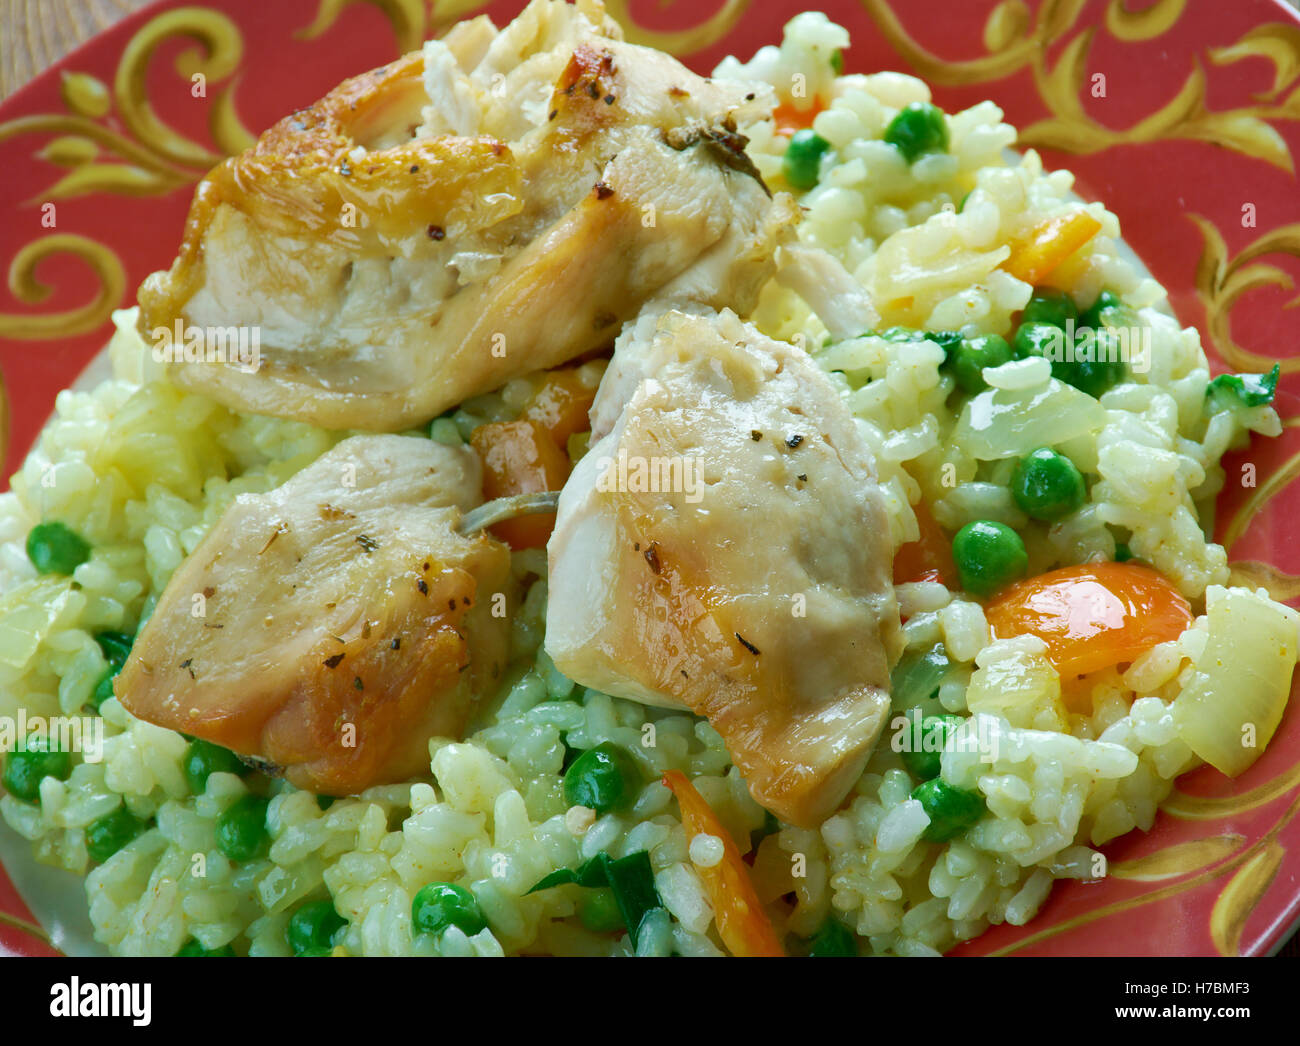 Qatami Brinjit fried chicken with rice and vegetables. Georgian cuisine Stock Photo